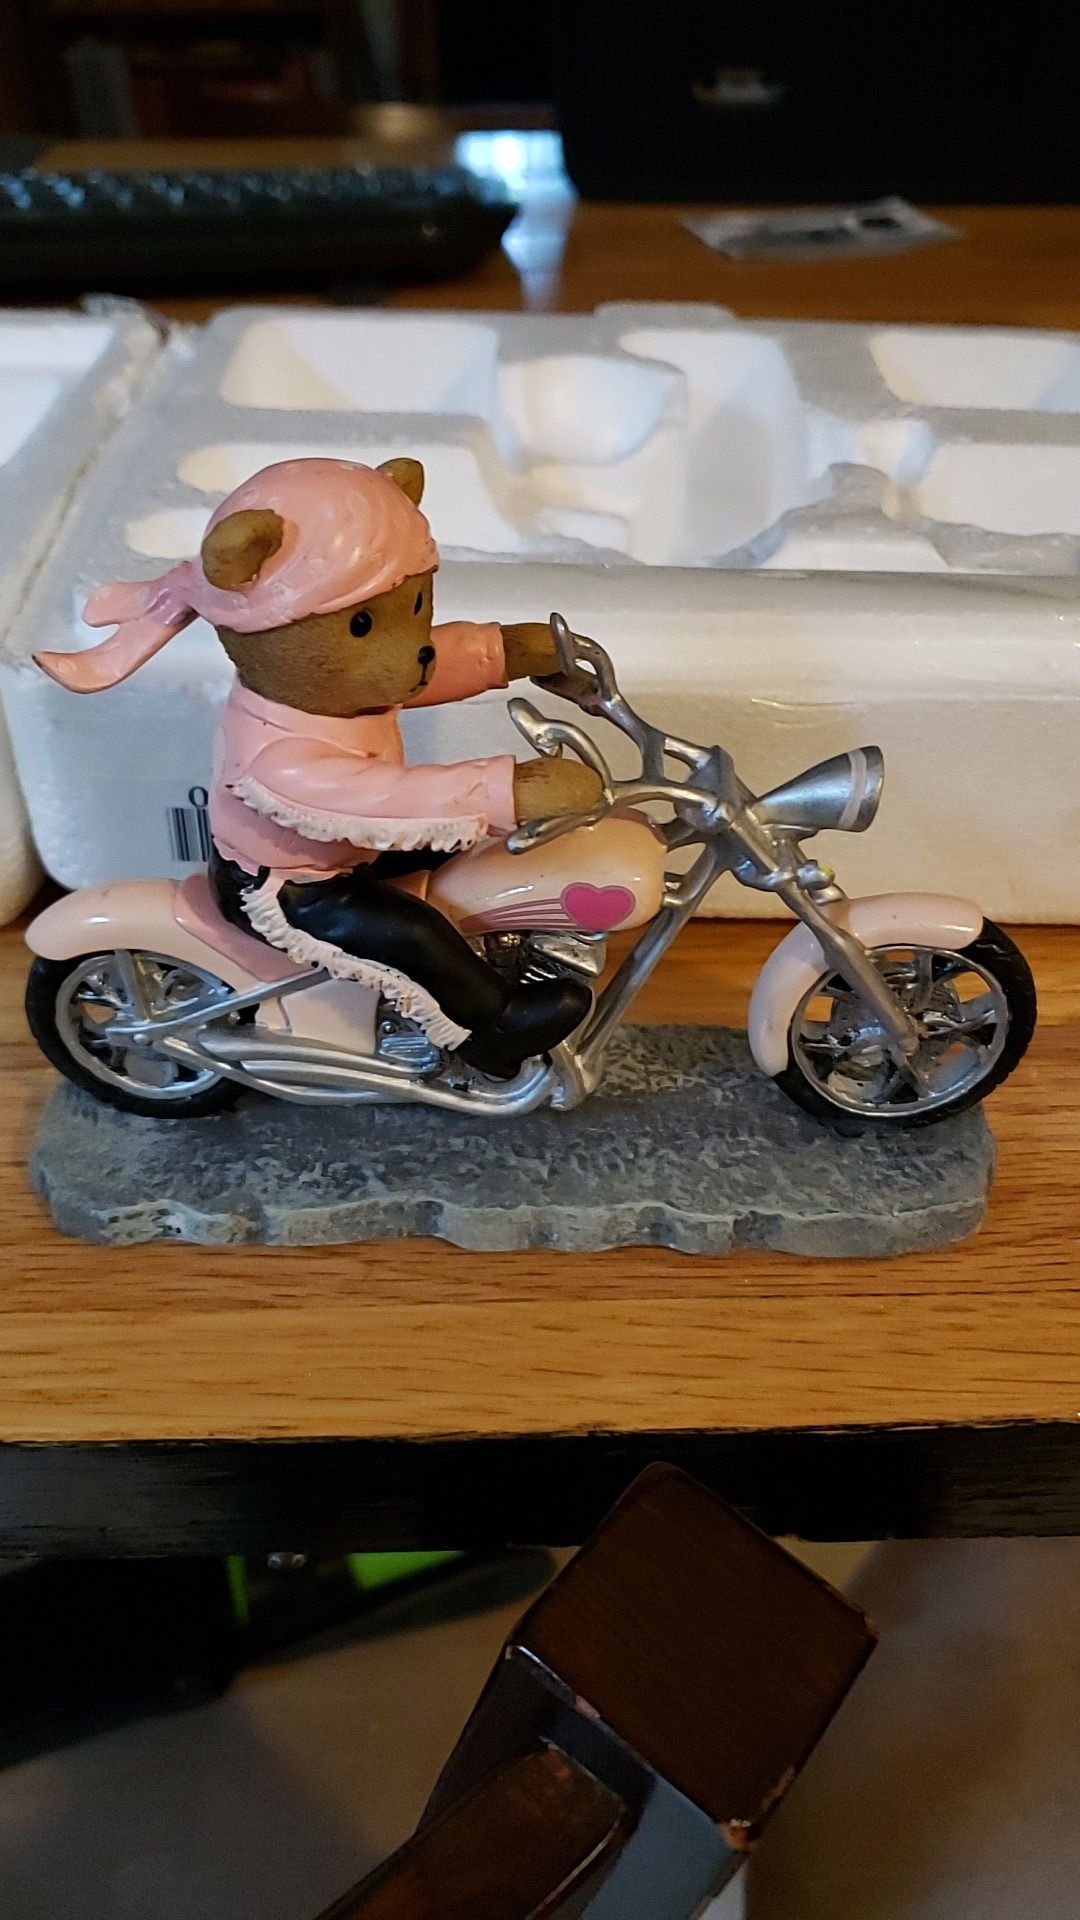 Teddy bear on motorcycle